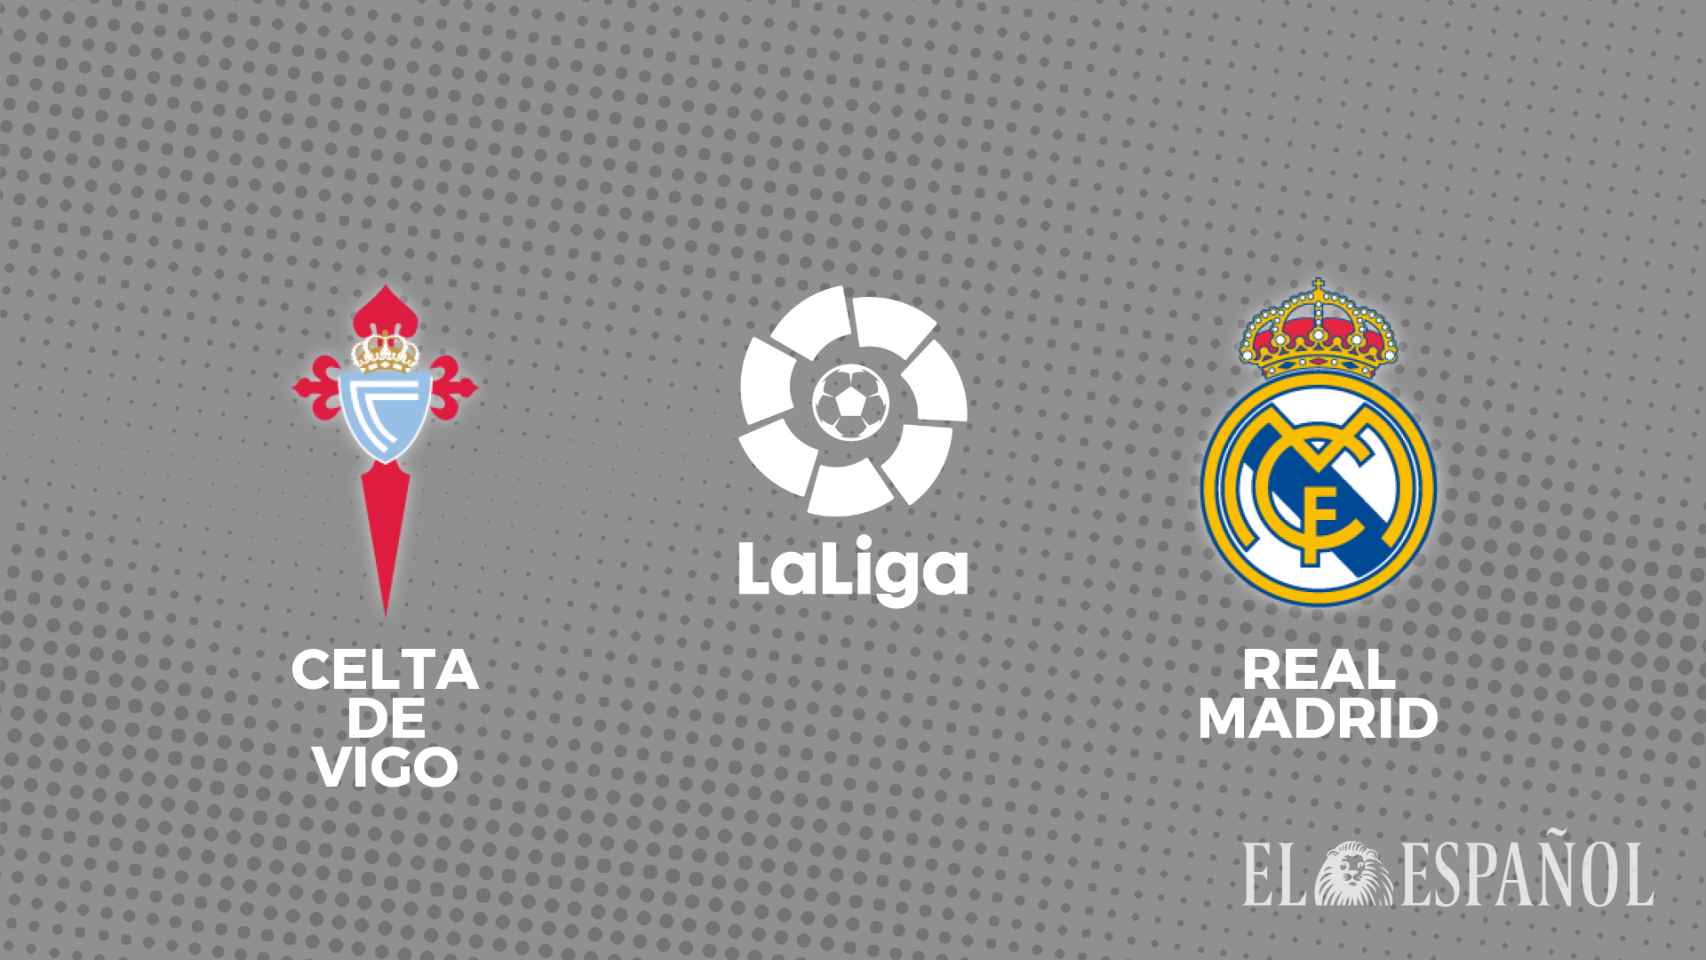 Реал против сельты. Real vs Celta Vigo. Real Madrid vs Celta. Арена Реал Мадрид 2022 2023. Чемпионат Испании по футболу 2022/2023.